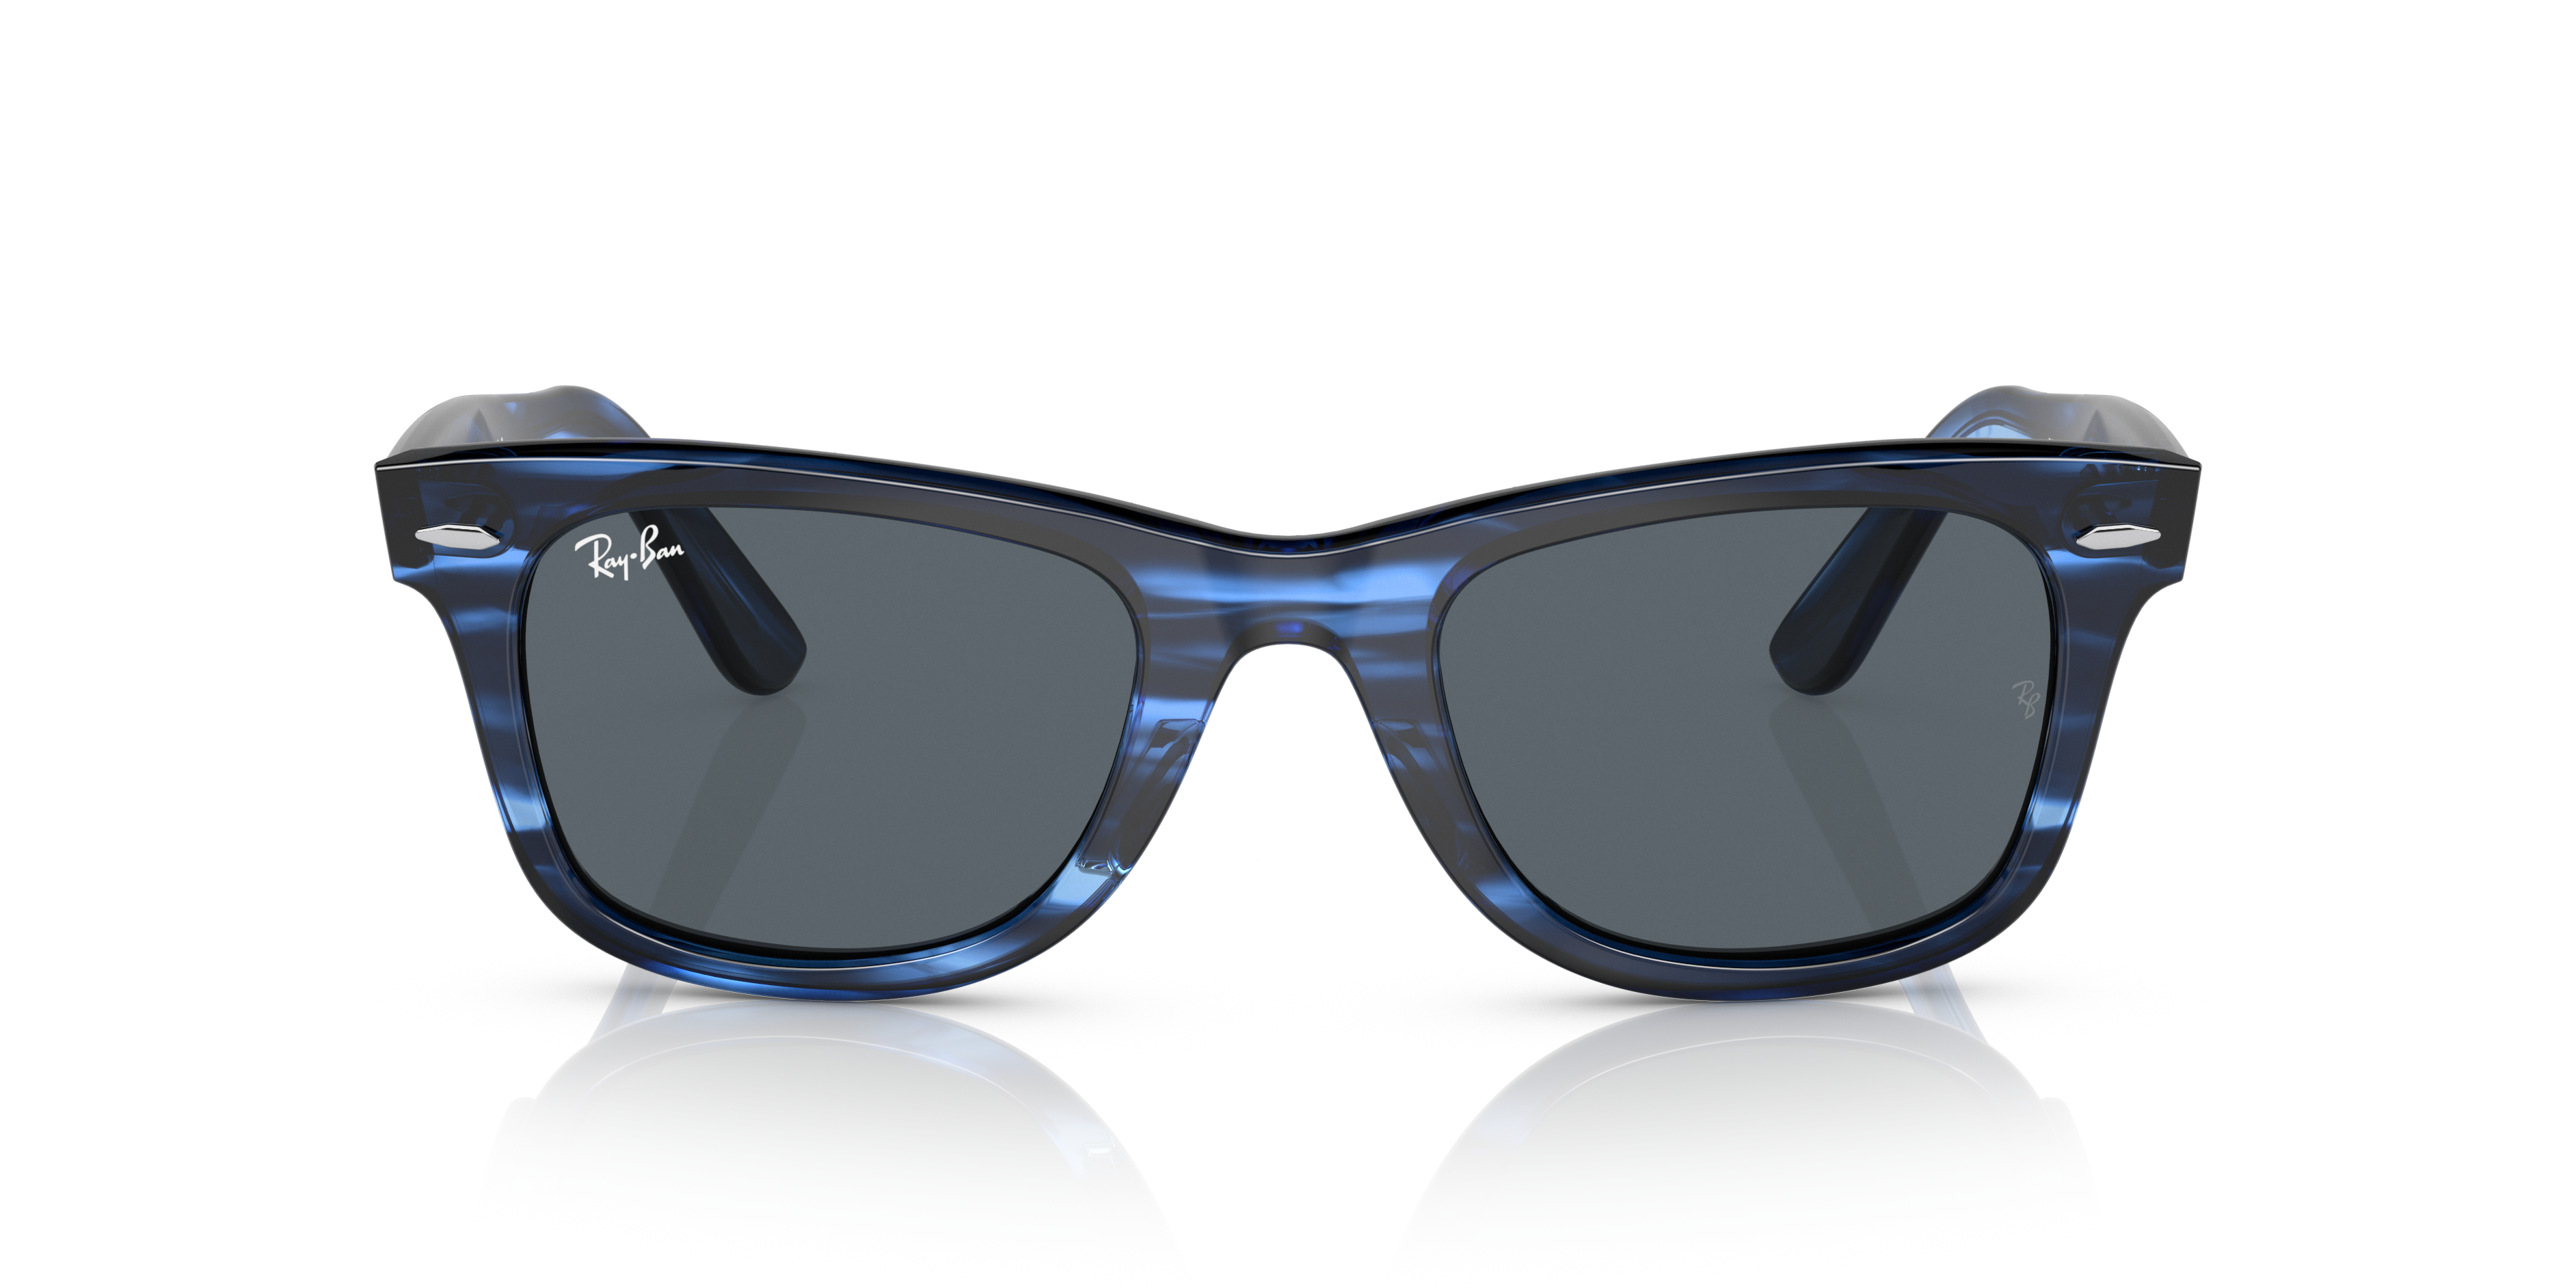 Ray-Ban Original Wayfarer Classic Men's Square Sunglasses - RB2140 901/58  50-22 for sale online | eBay